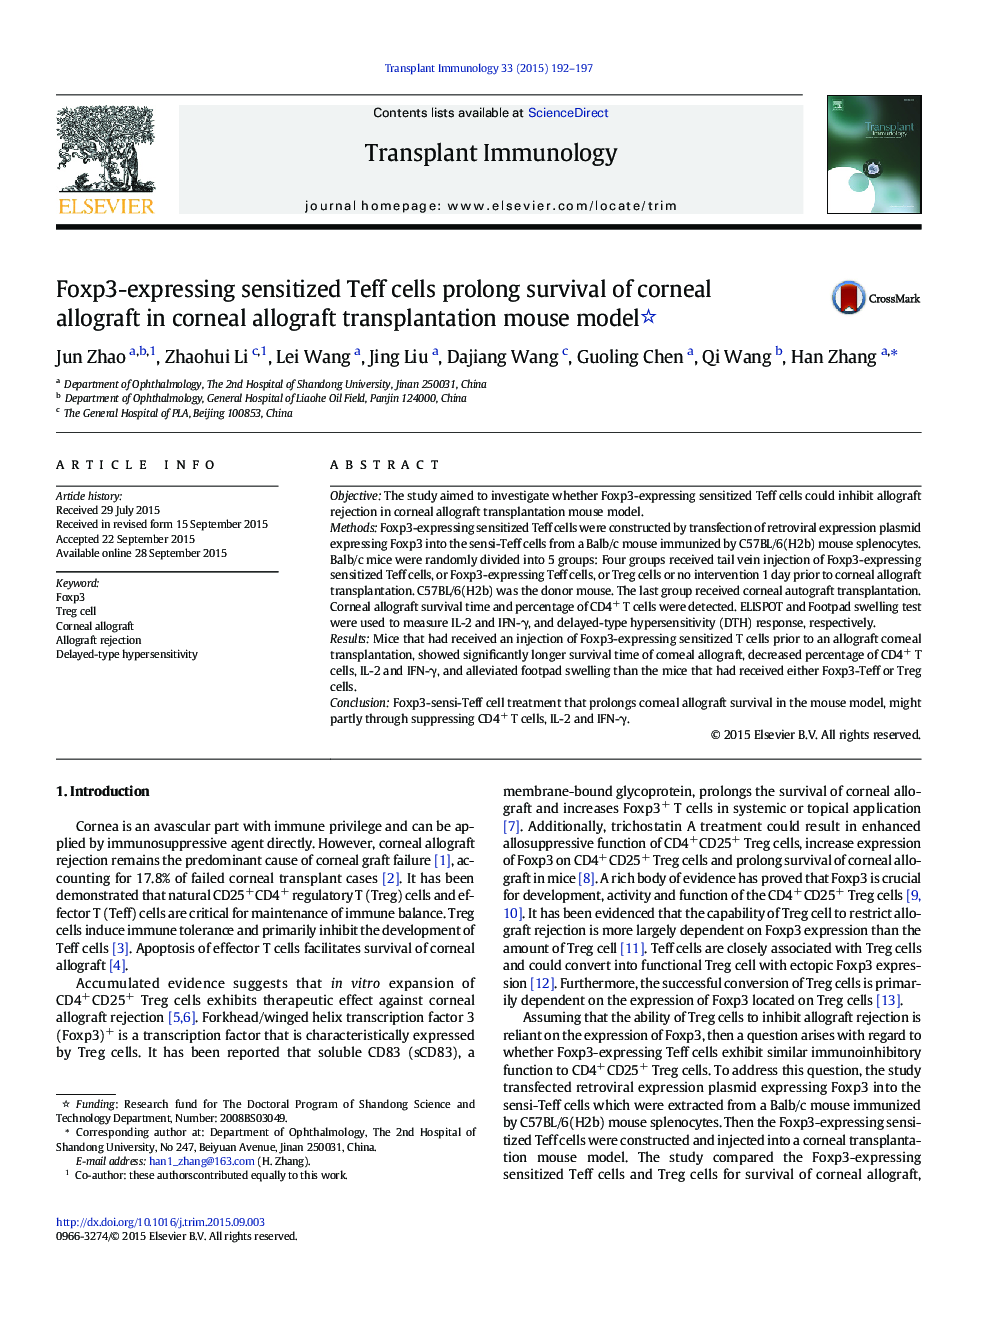 Foxp3-expressing sensitized Teff cells prolong survival of corneal allograft in corneal allograft transplantation mouse model 